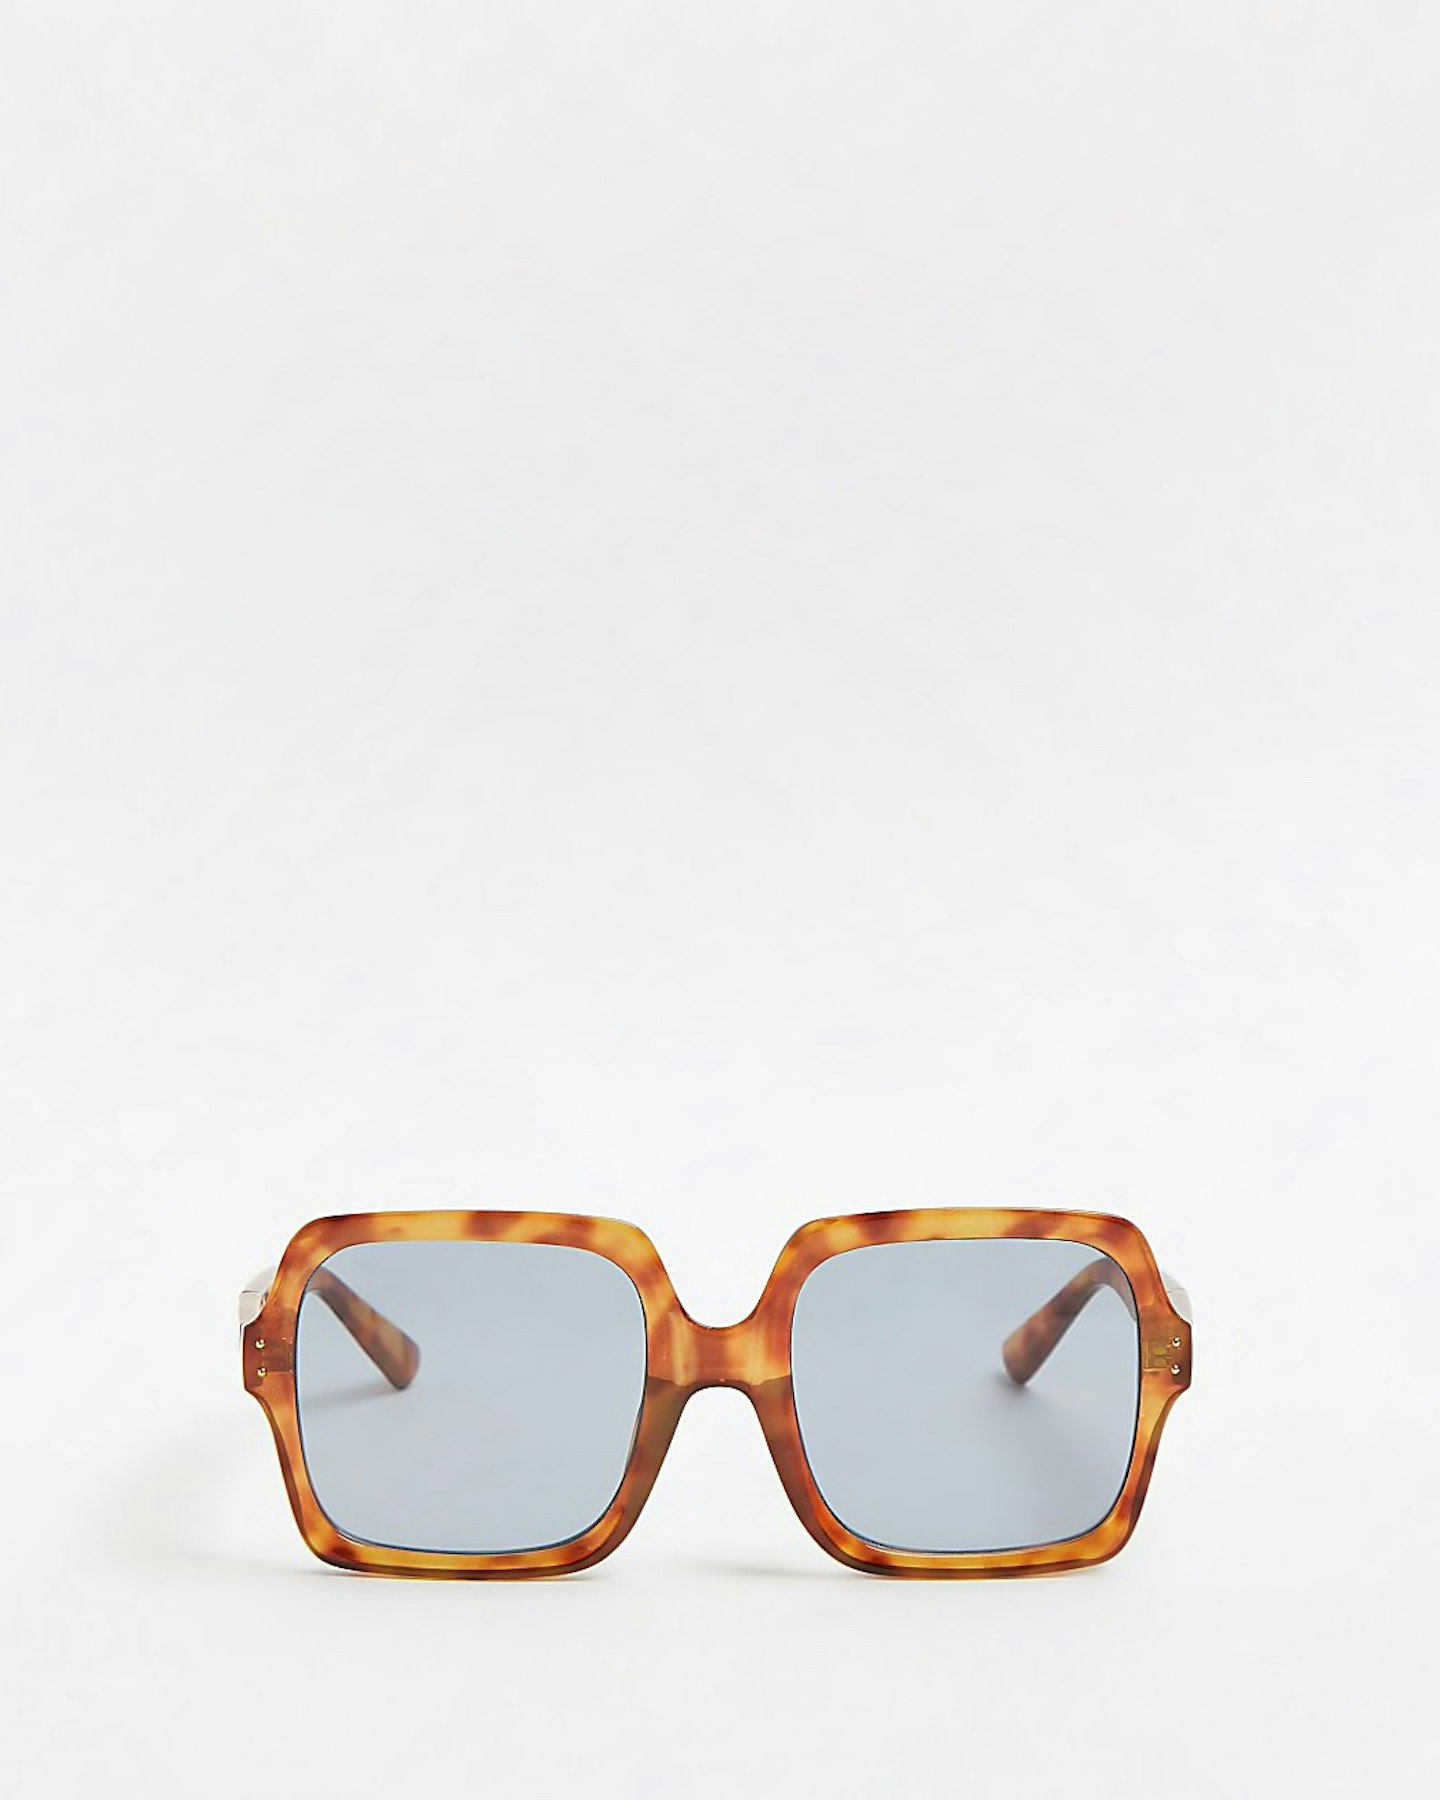 river island best buys Orange Tortoishell Oversized Sunglasses, £16